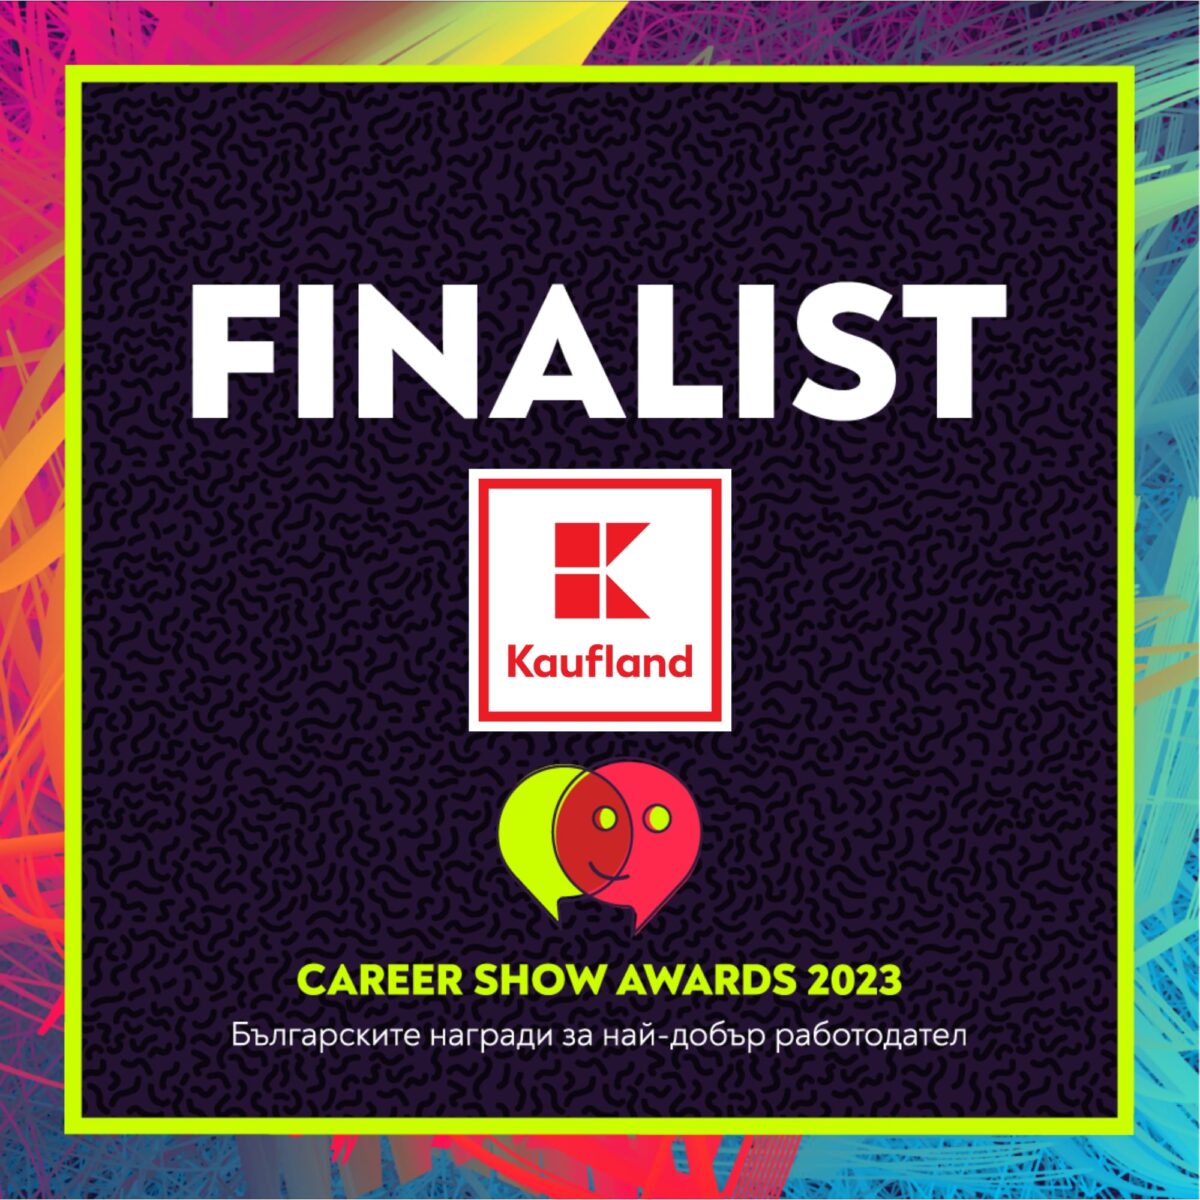 Kaufland България е финалист в 16 категории на Career Show Awards 2023